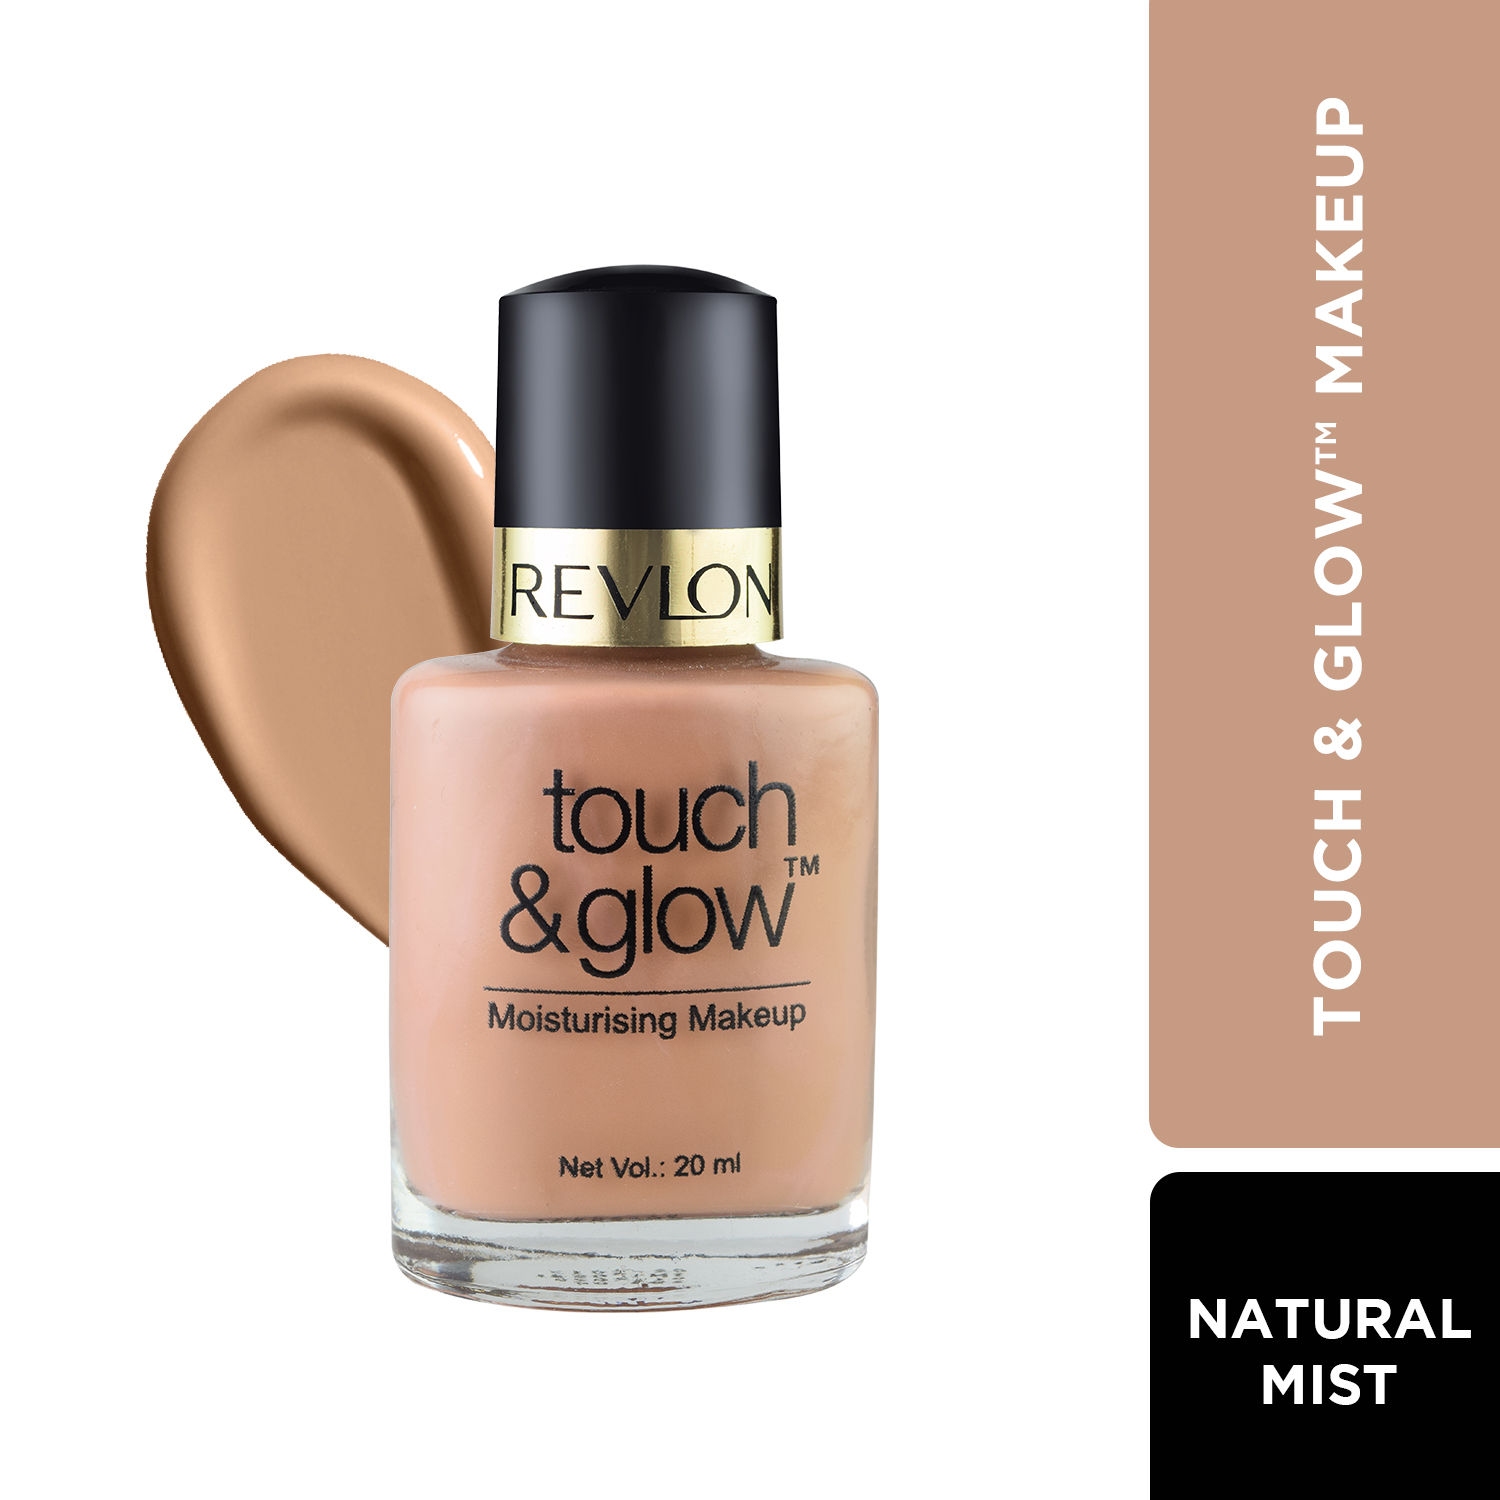 Revlon Touch & Glow Moisturising Makeup - Natural Mist